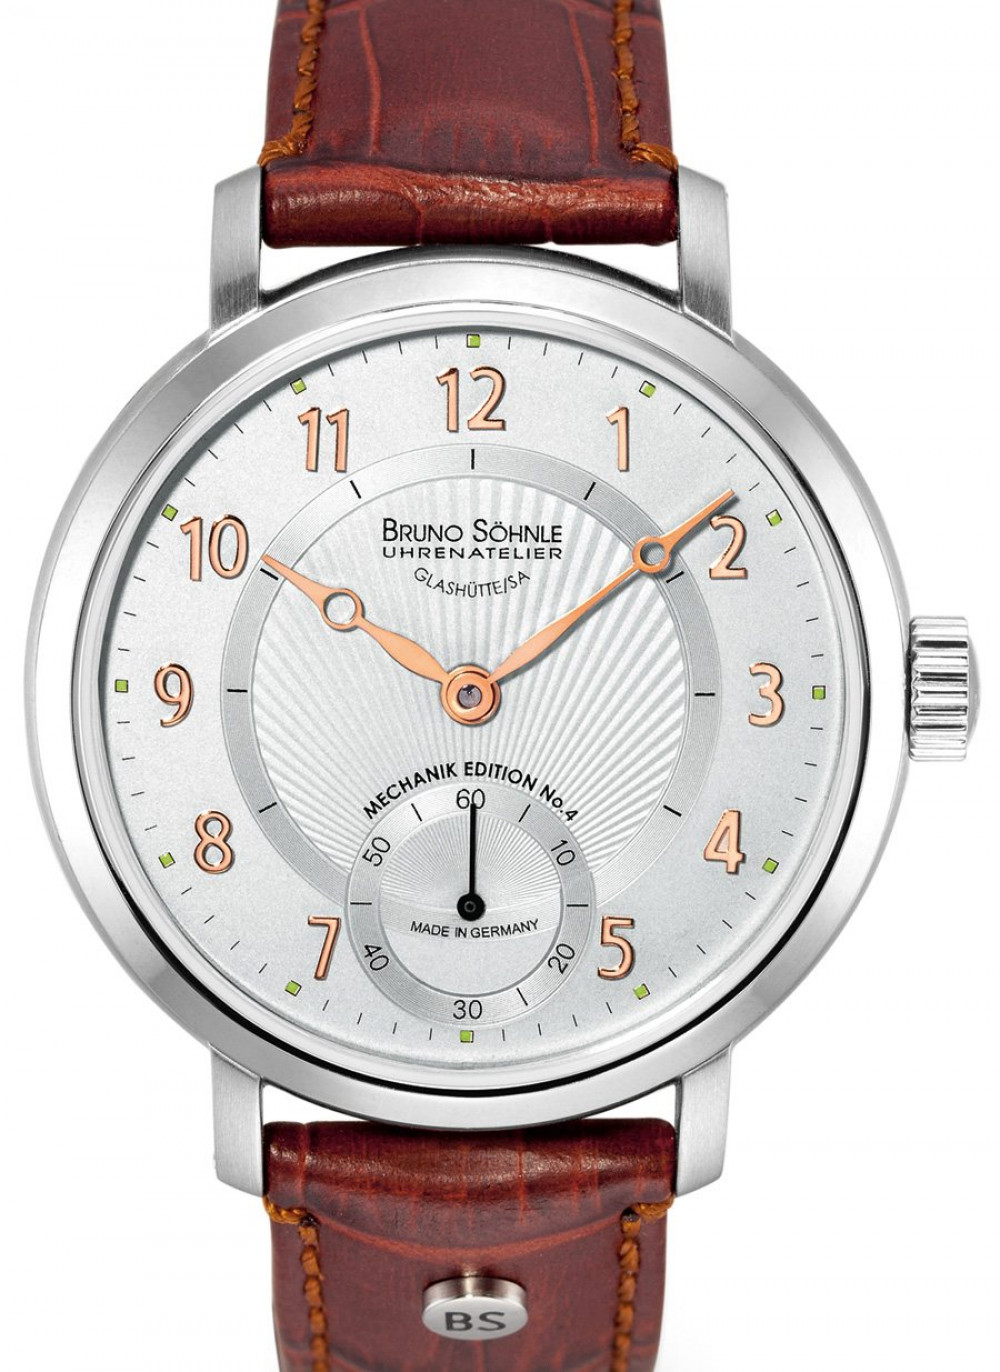 Zegarek firmy Bruno Söhnle, model Mechanik Edition IV